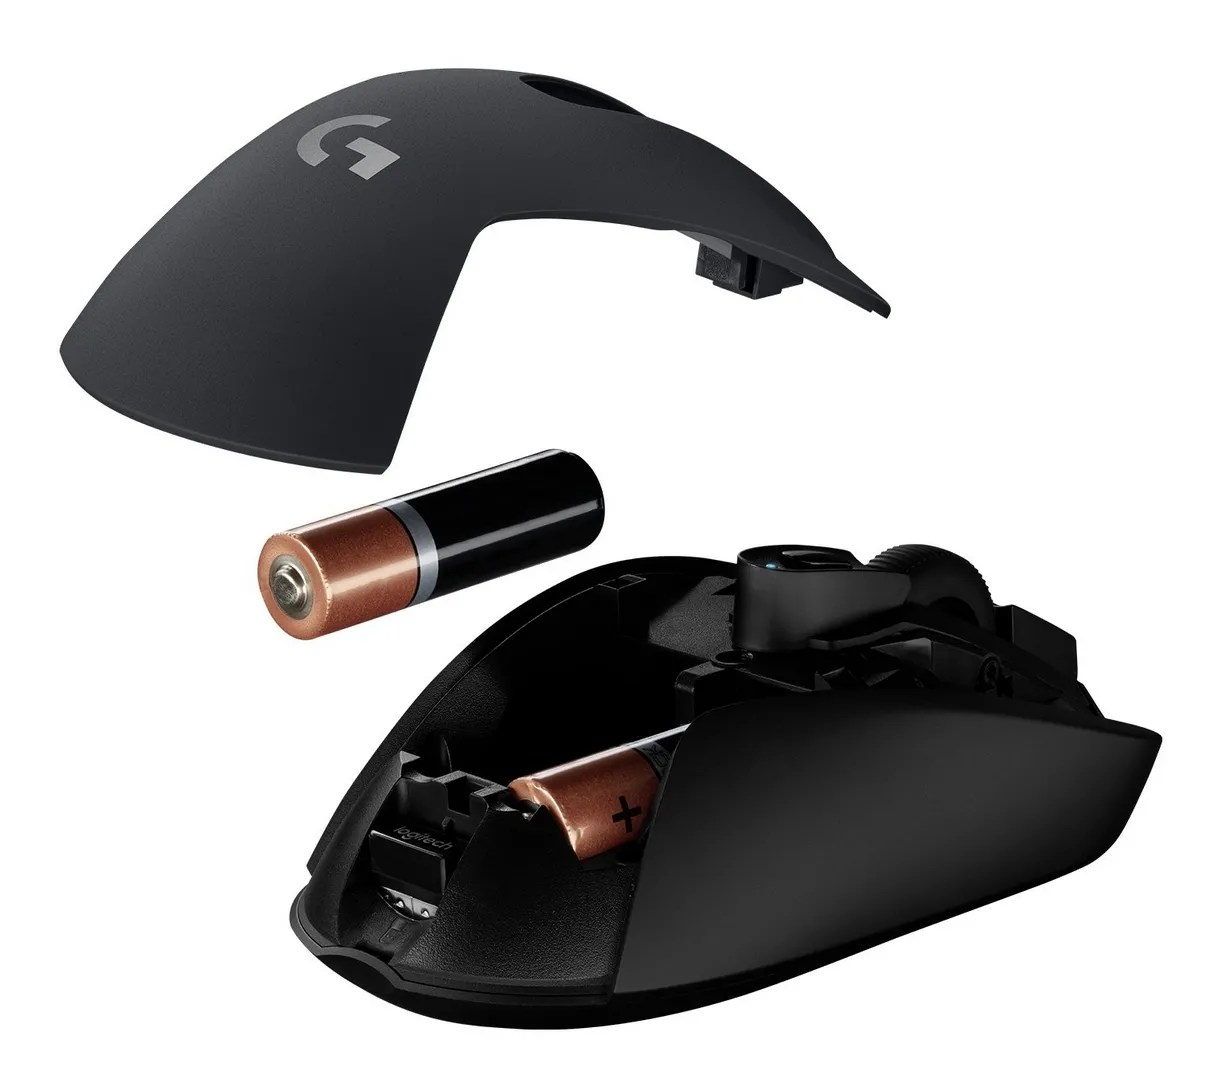 Gaming Mouse Logitech G603, Negru